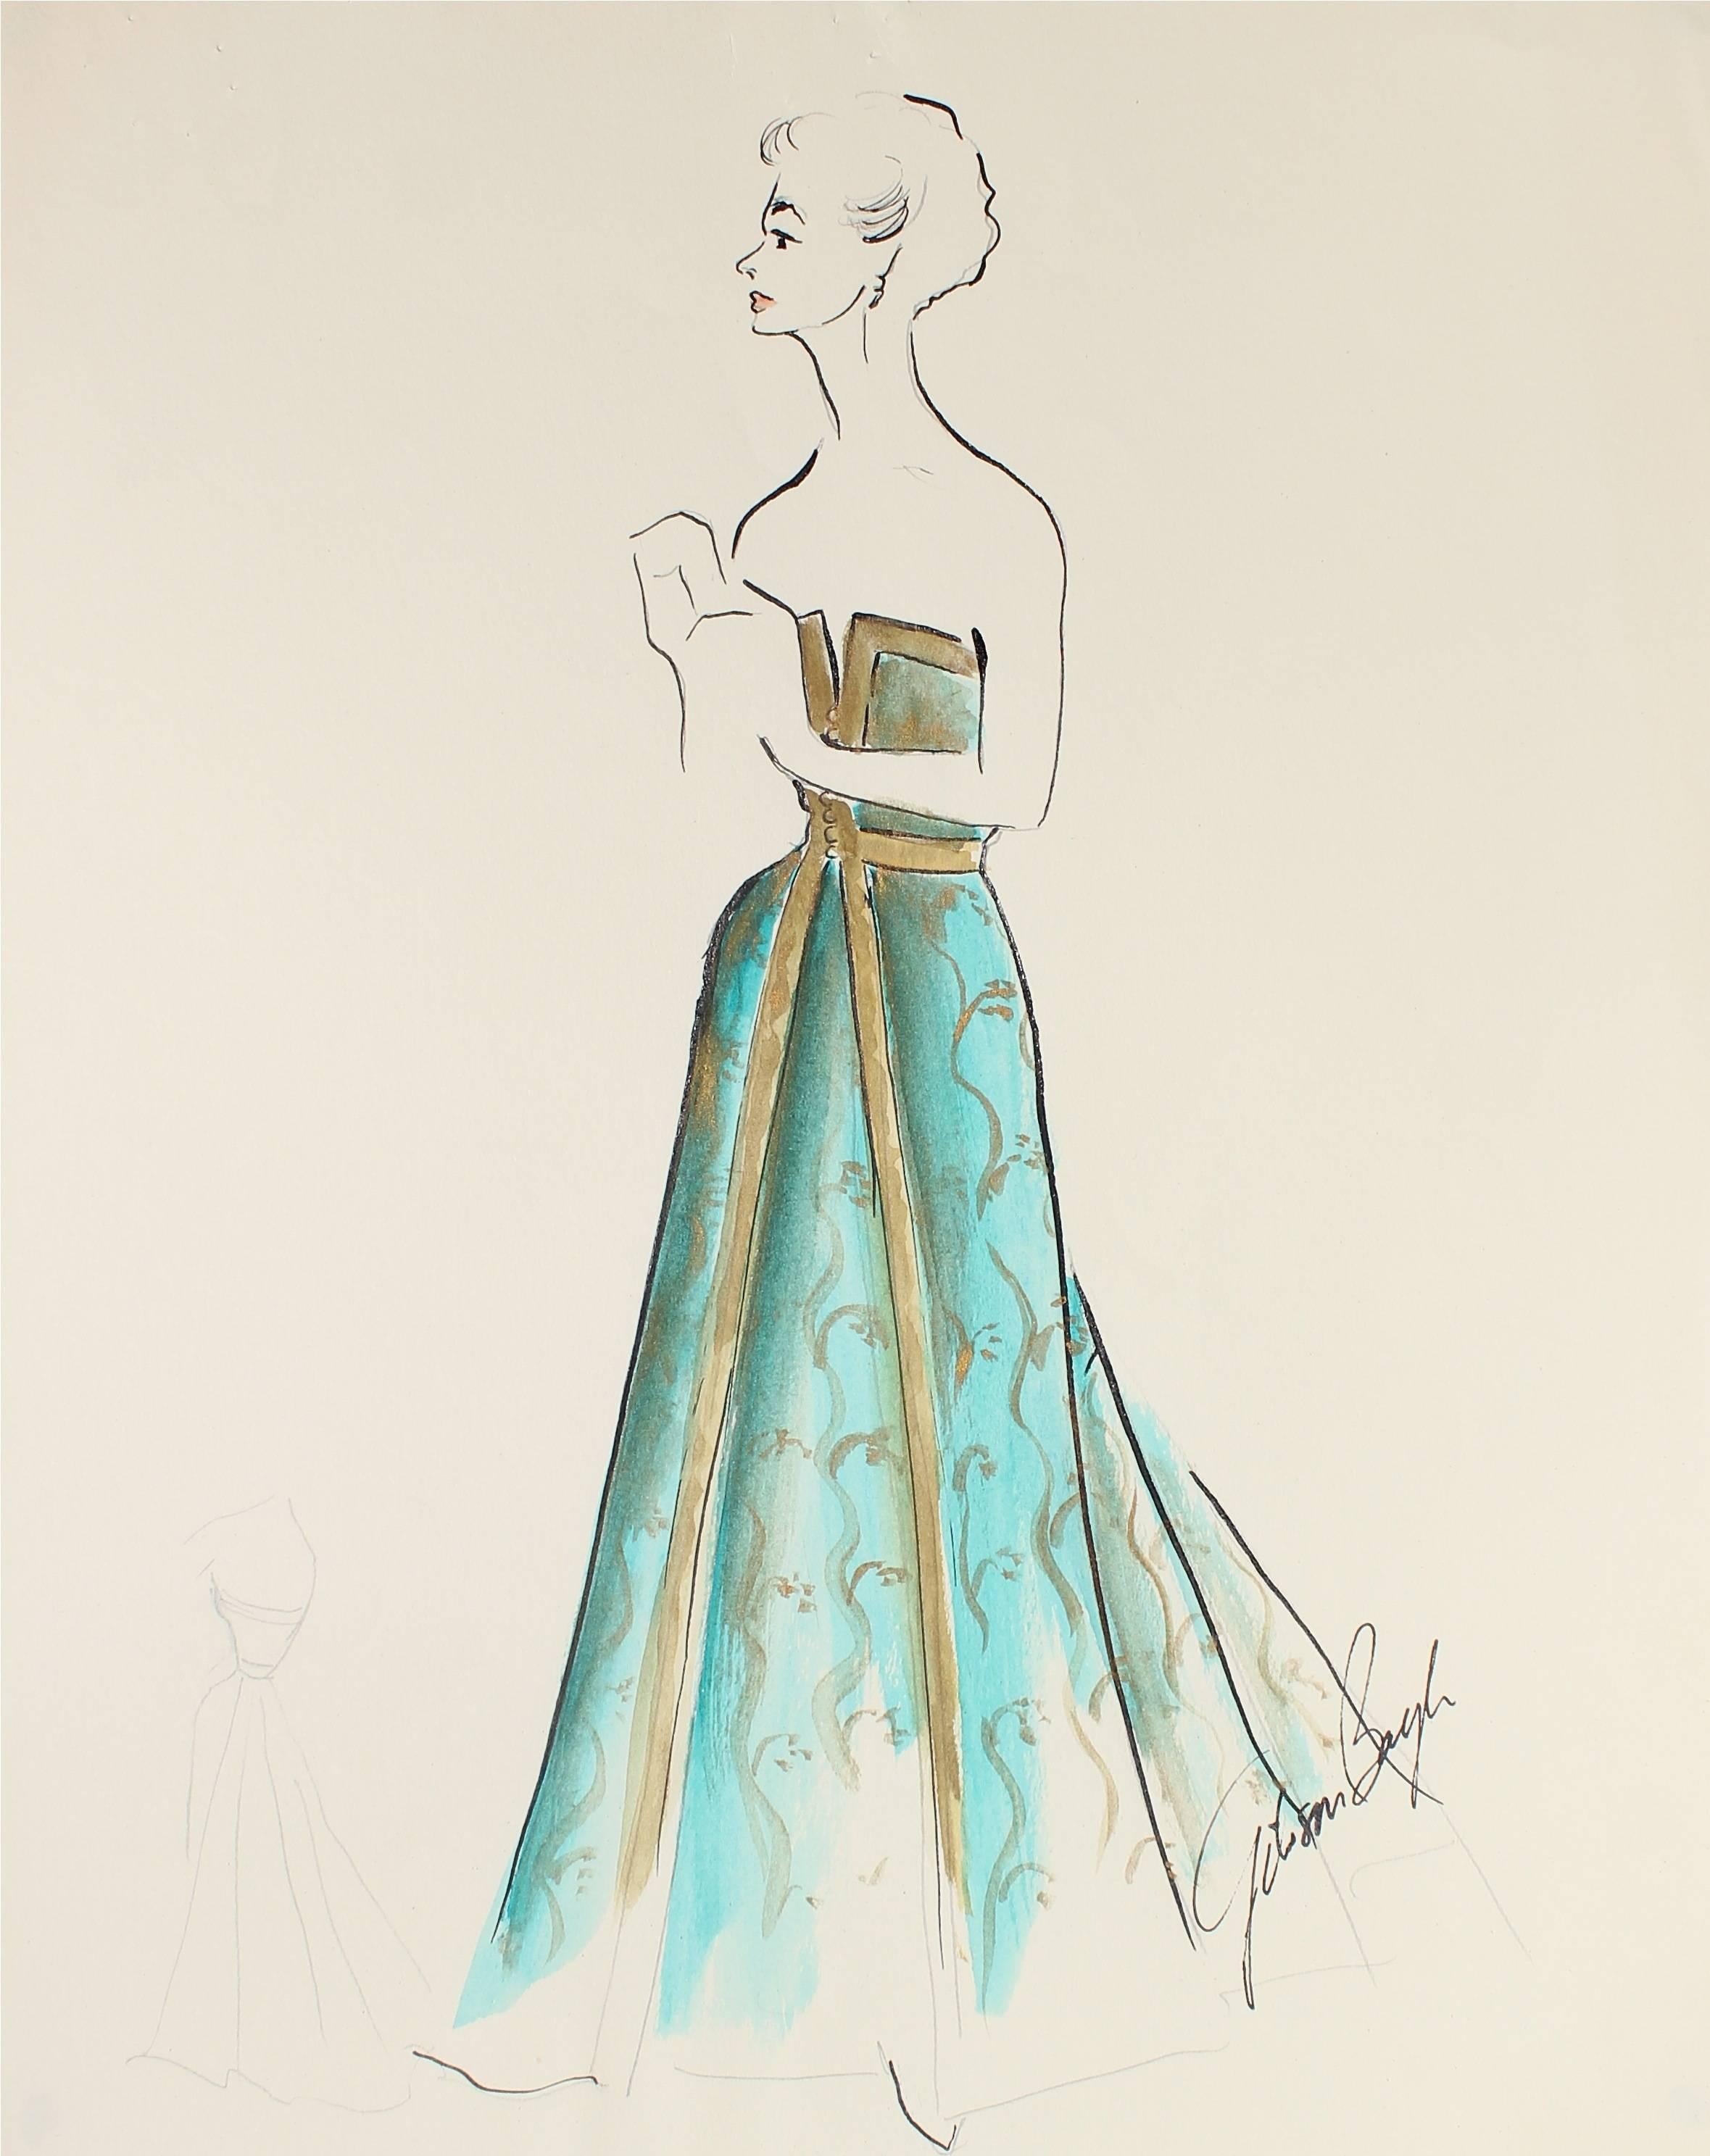 Gibson Bayh Figurative Art - Evening Dress Fashion Illustration in Gouache, 1950s